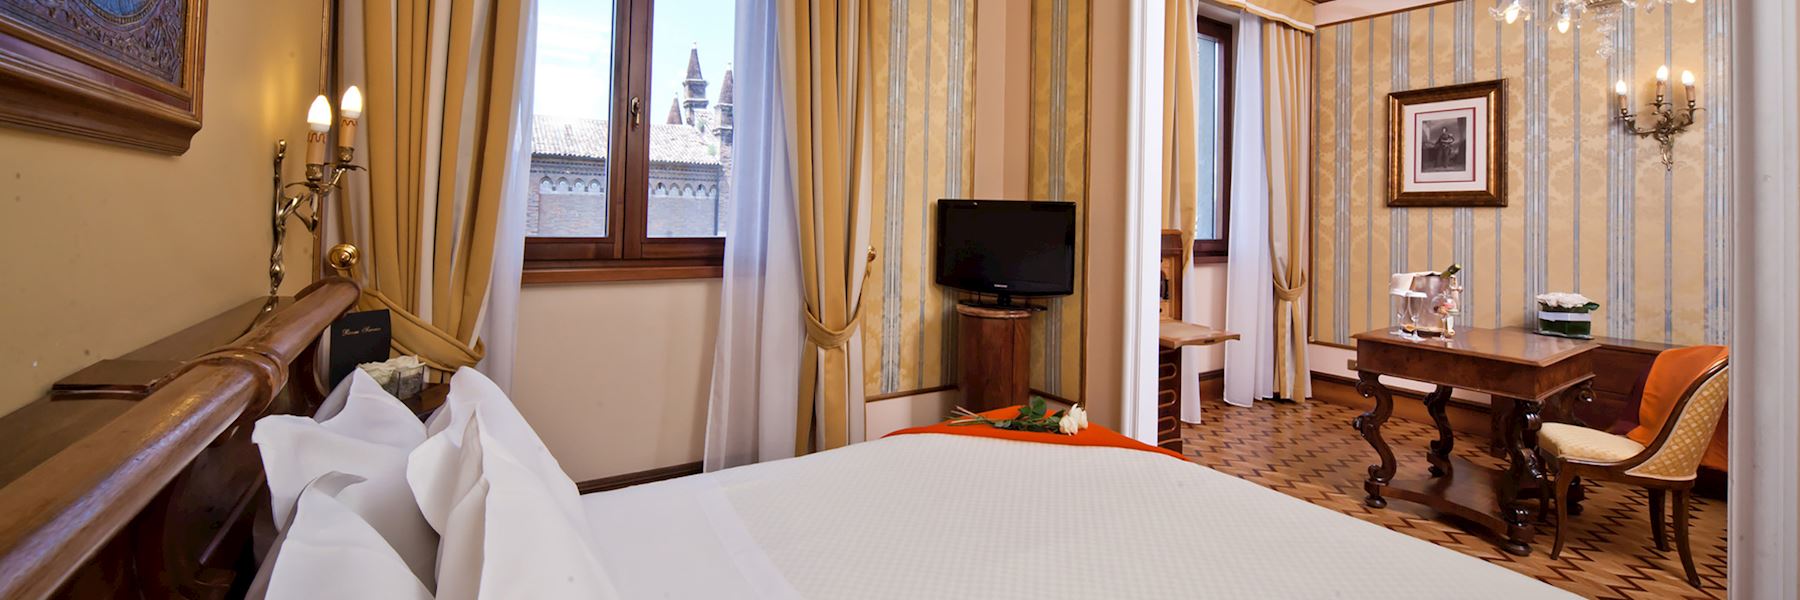 Due Torri Hotel Hotels In Verona Audley Travel - 